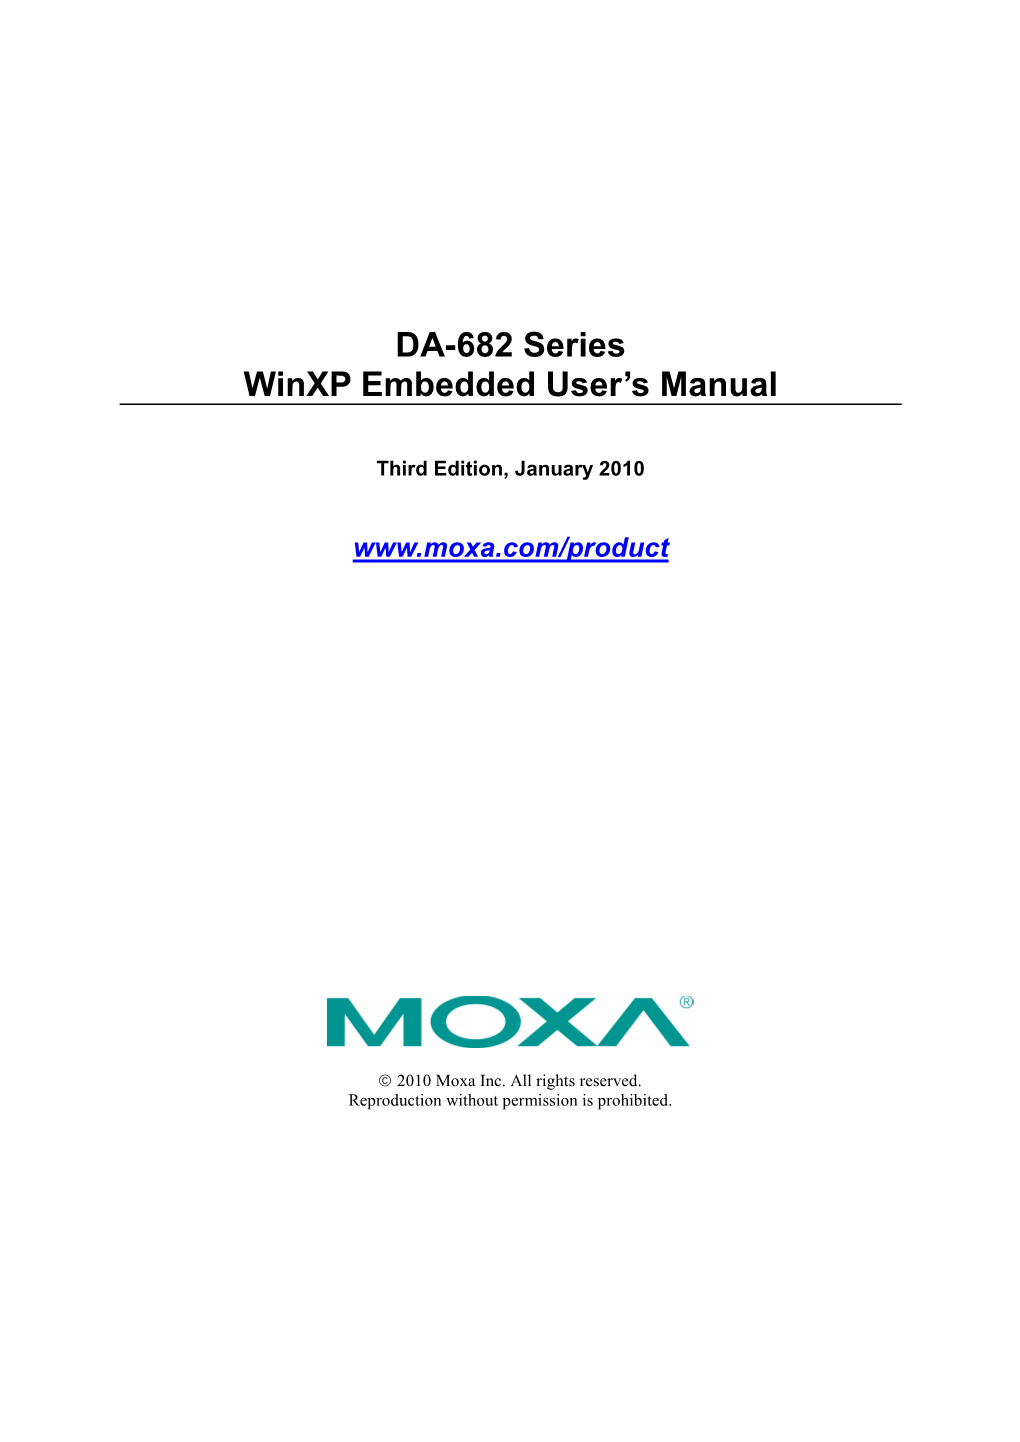 DA-682-XPE Series User's Manual V3